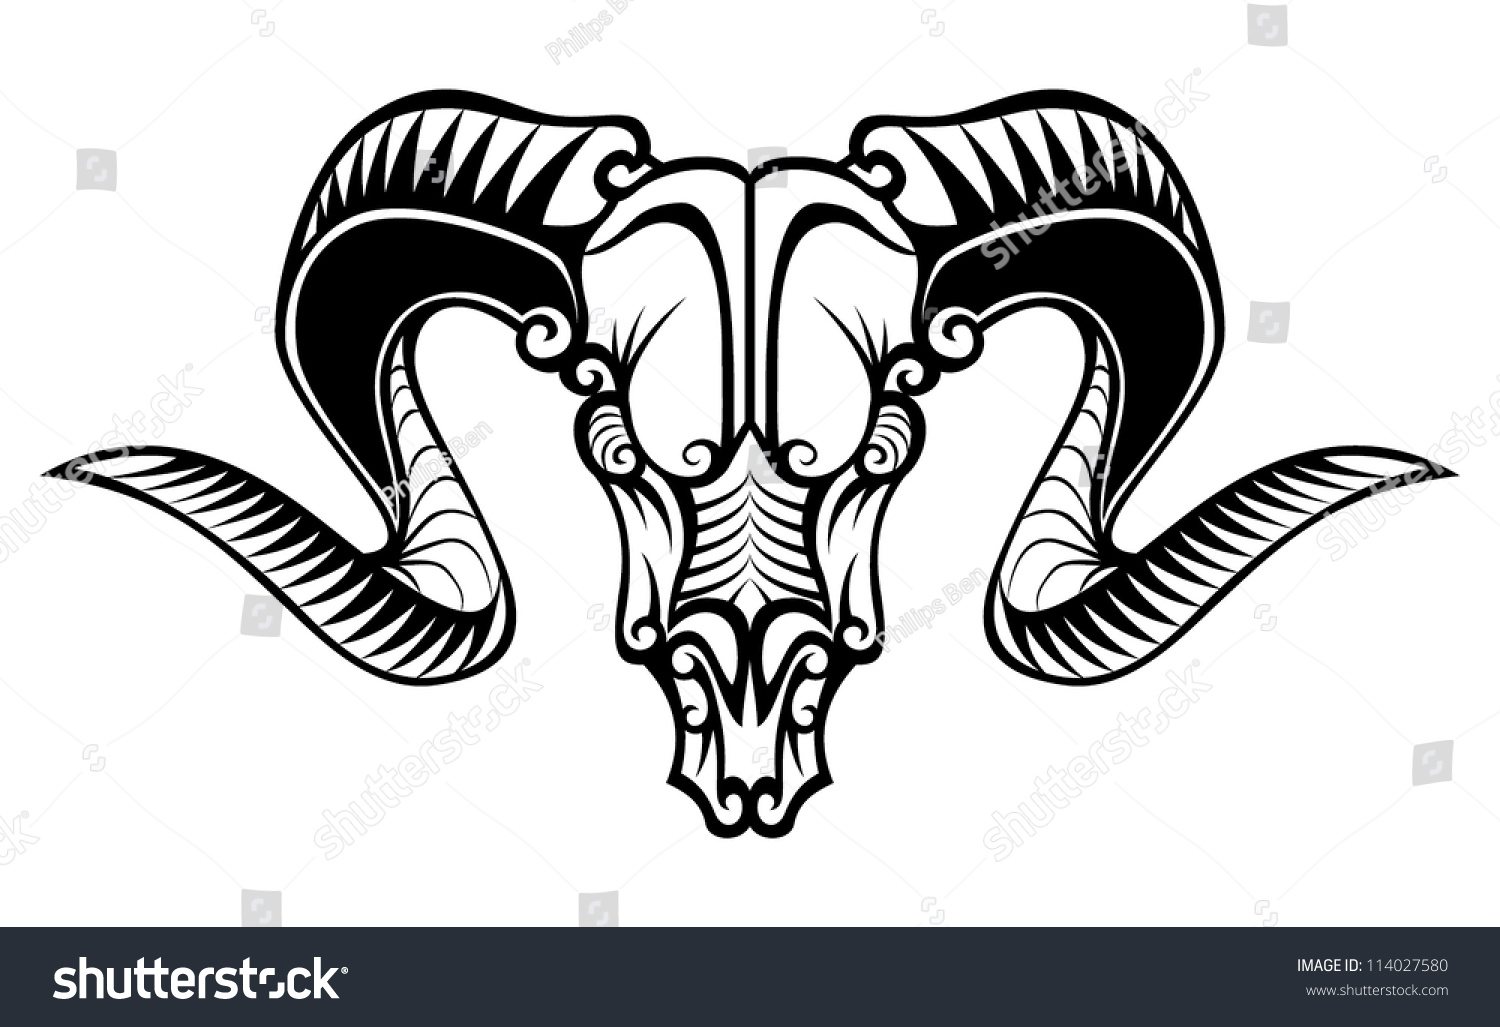 Sheep Tribal Tattoo Stock Vector 114027580 - Shutterstock